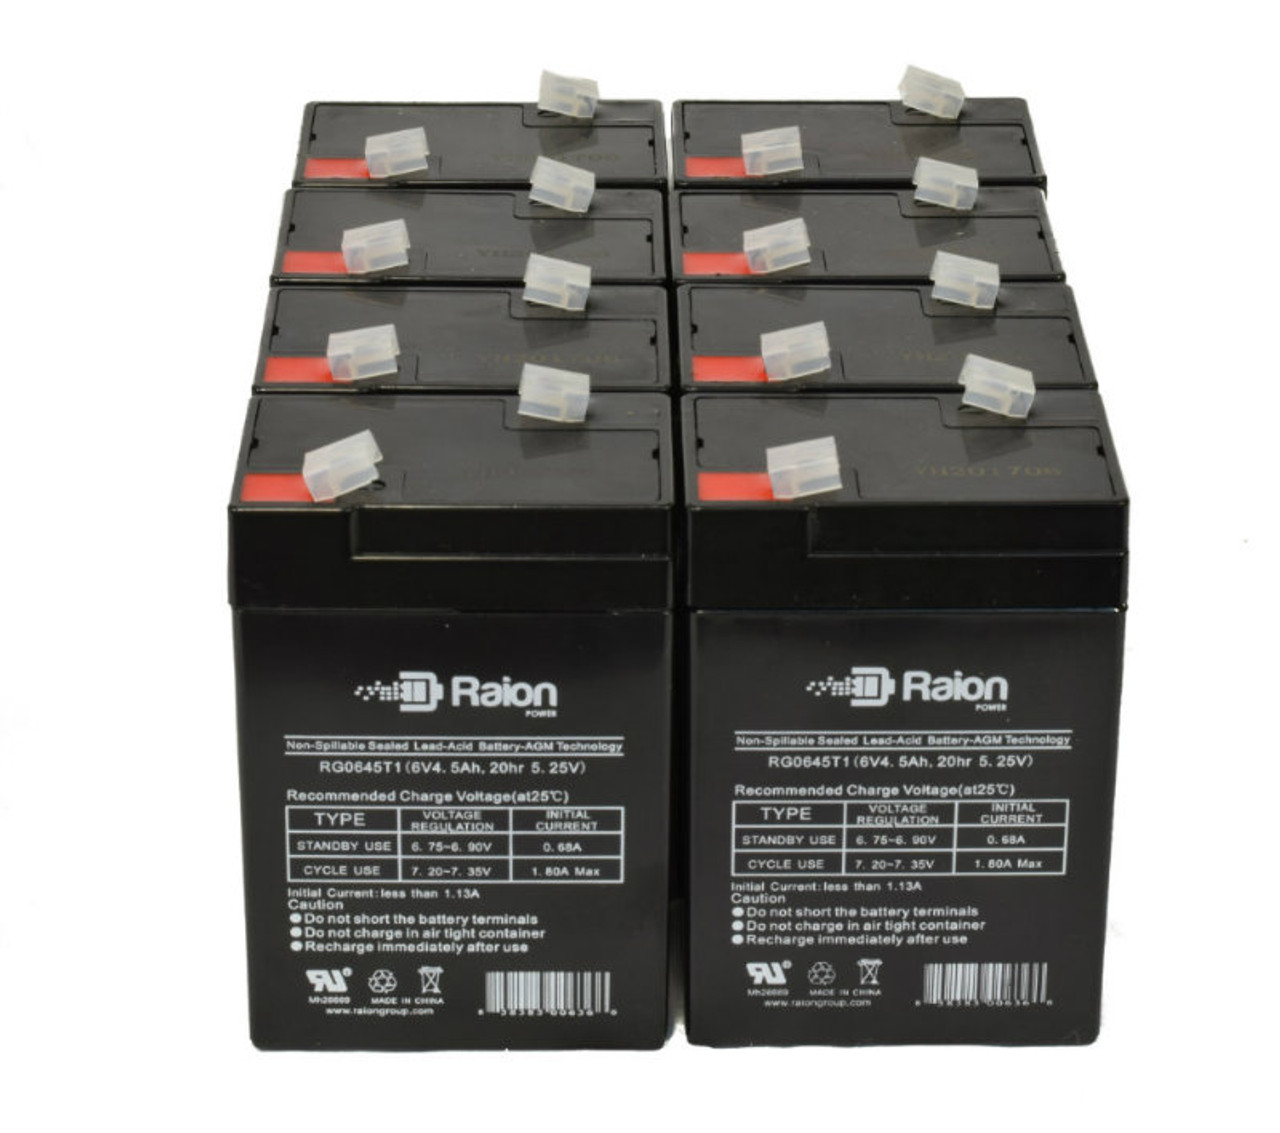 Raion Power 6V 4.5Ah Replacement Emergency Light Battery for Emergi-Lite CSM9 - 8 Pack